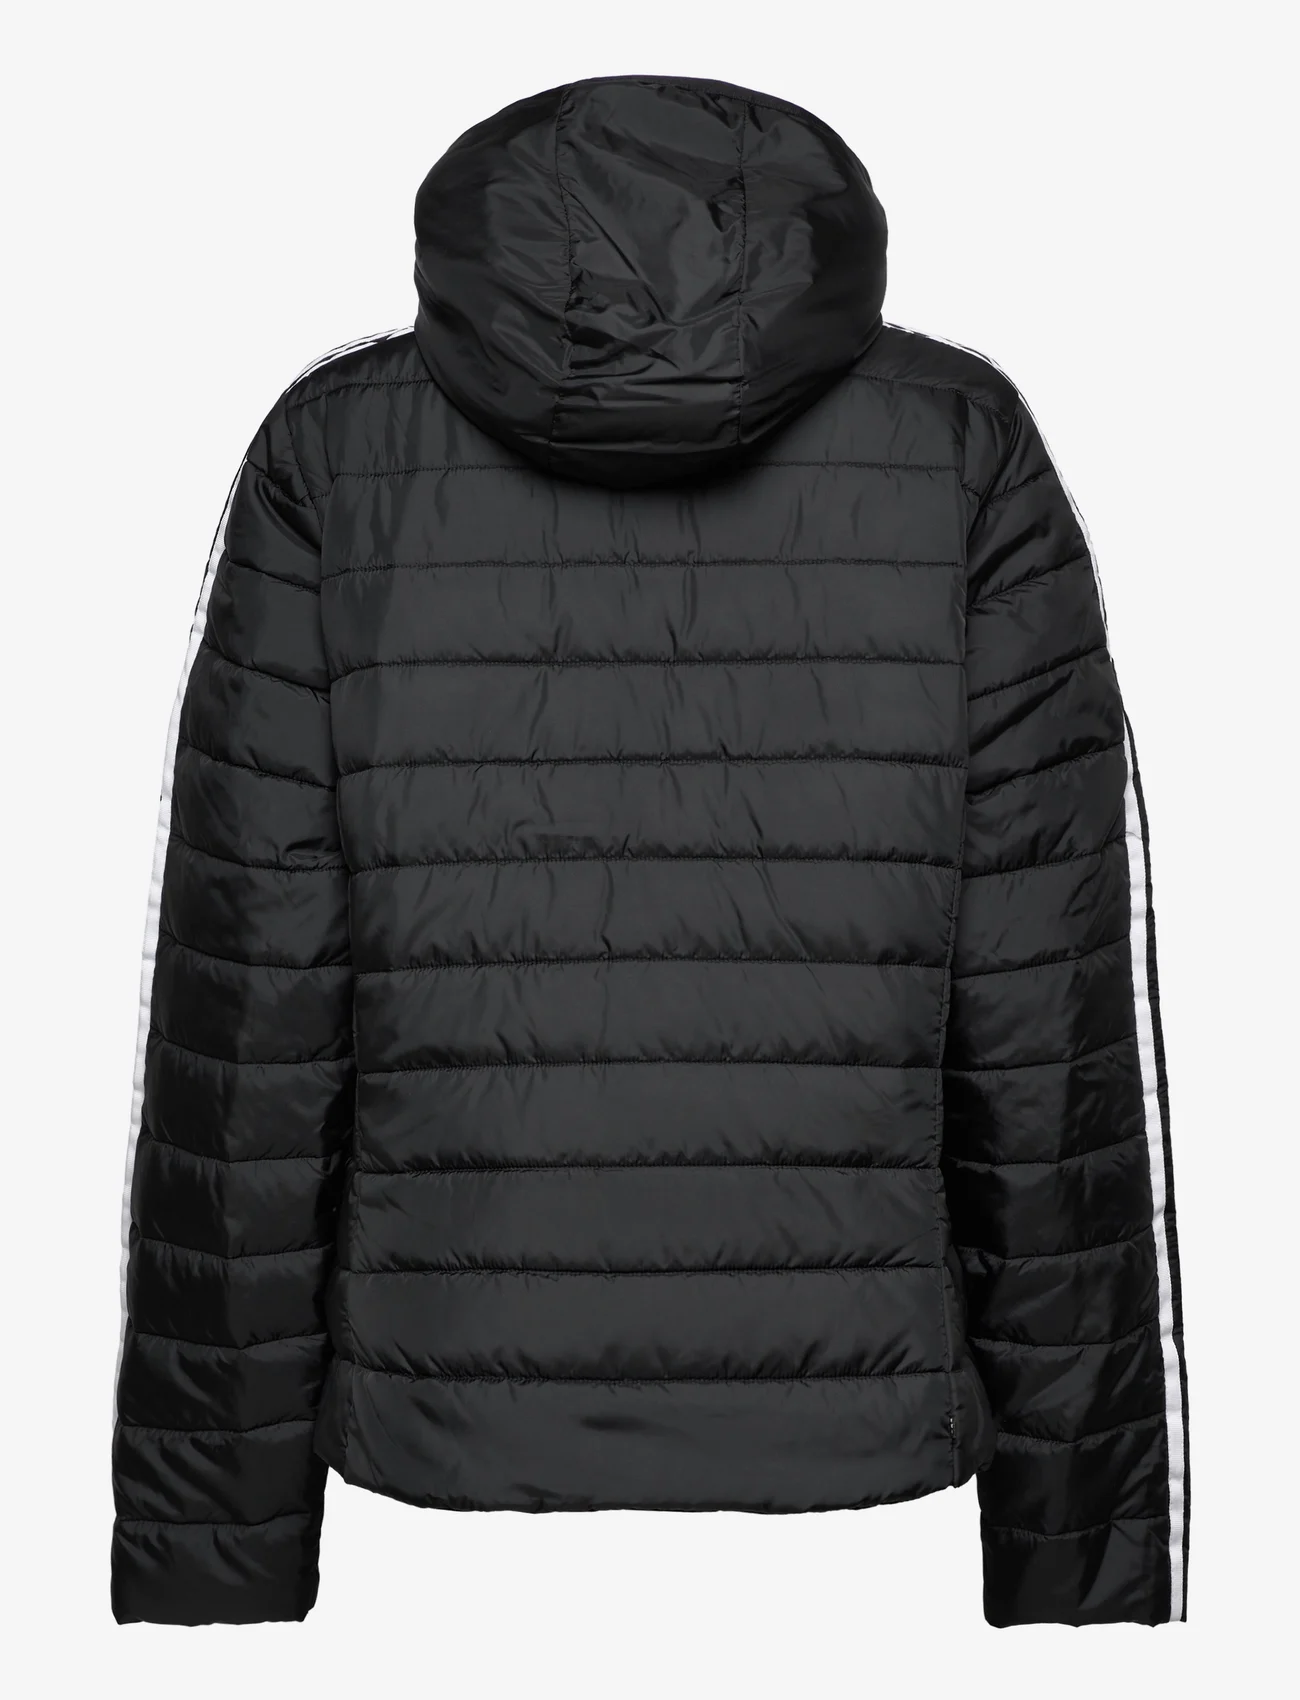 adidas Originals - Hooded Premium Slim Jacket (Plus Size) - winter jacket - black - 1